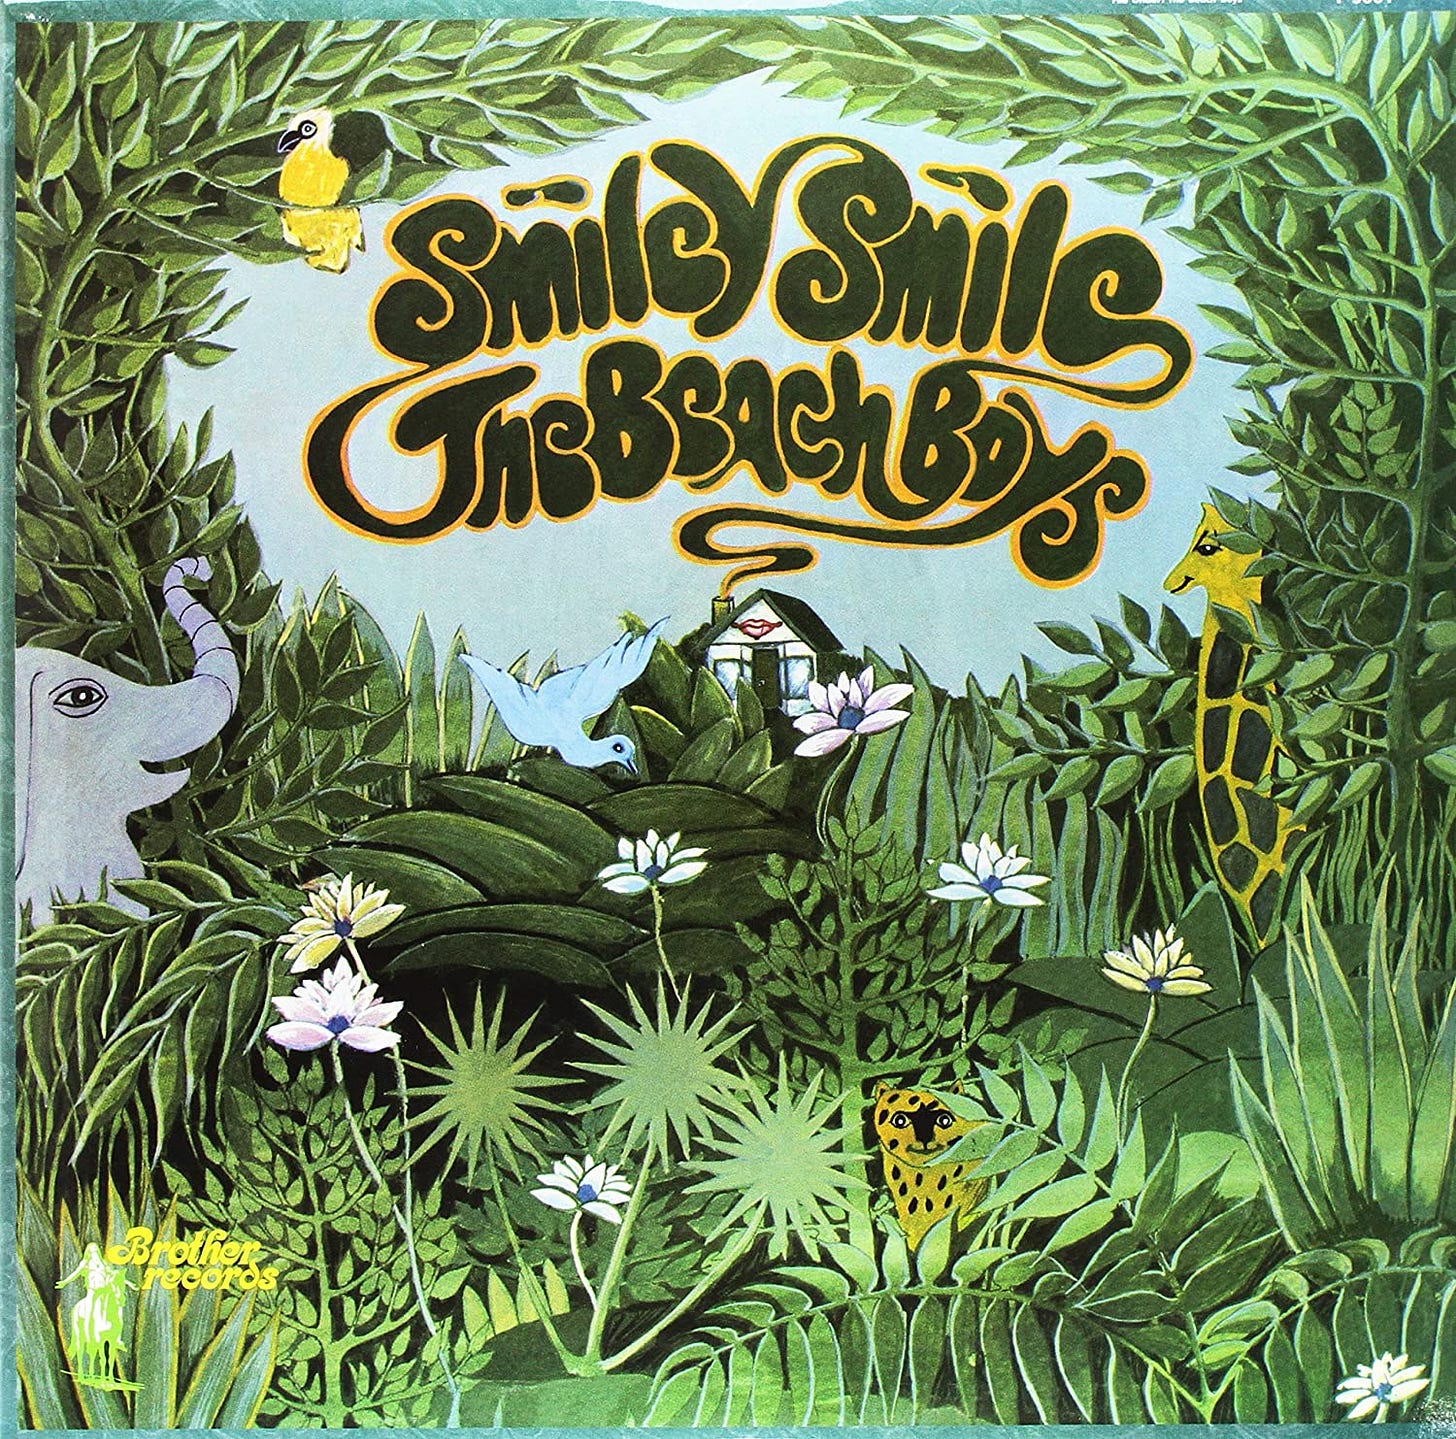 Smiley Smile (200G/Mono) (Vinyl): BEACH BOYS: Amazon.ca: Music